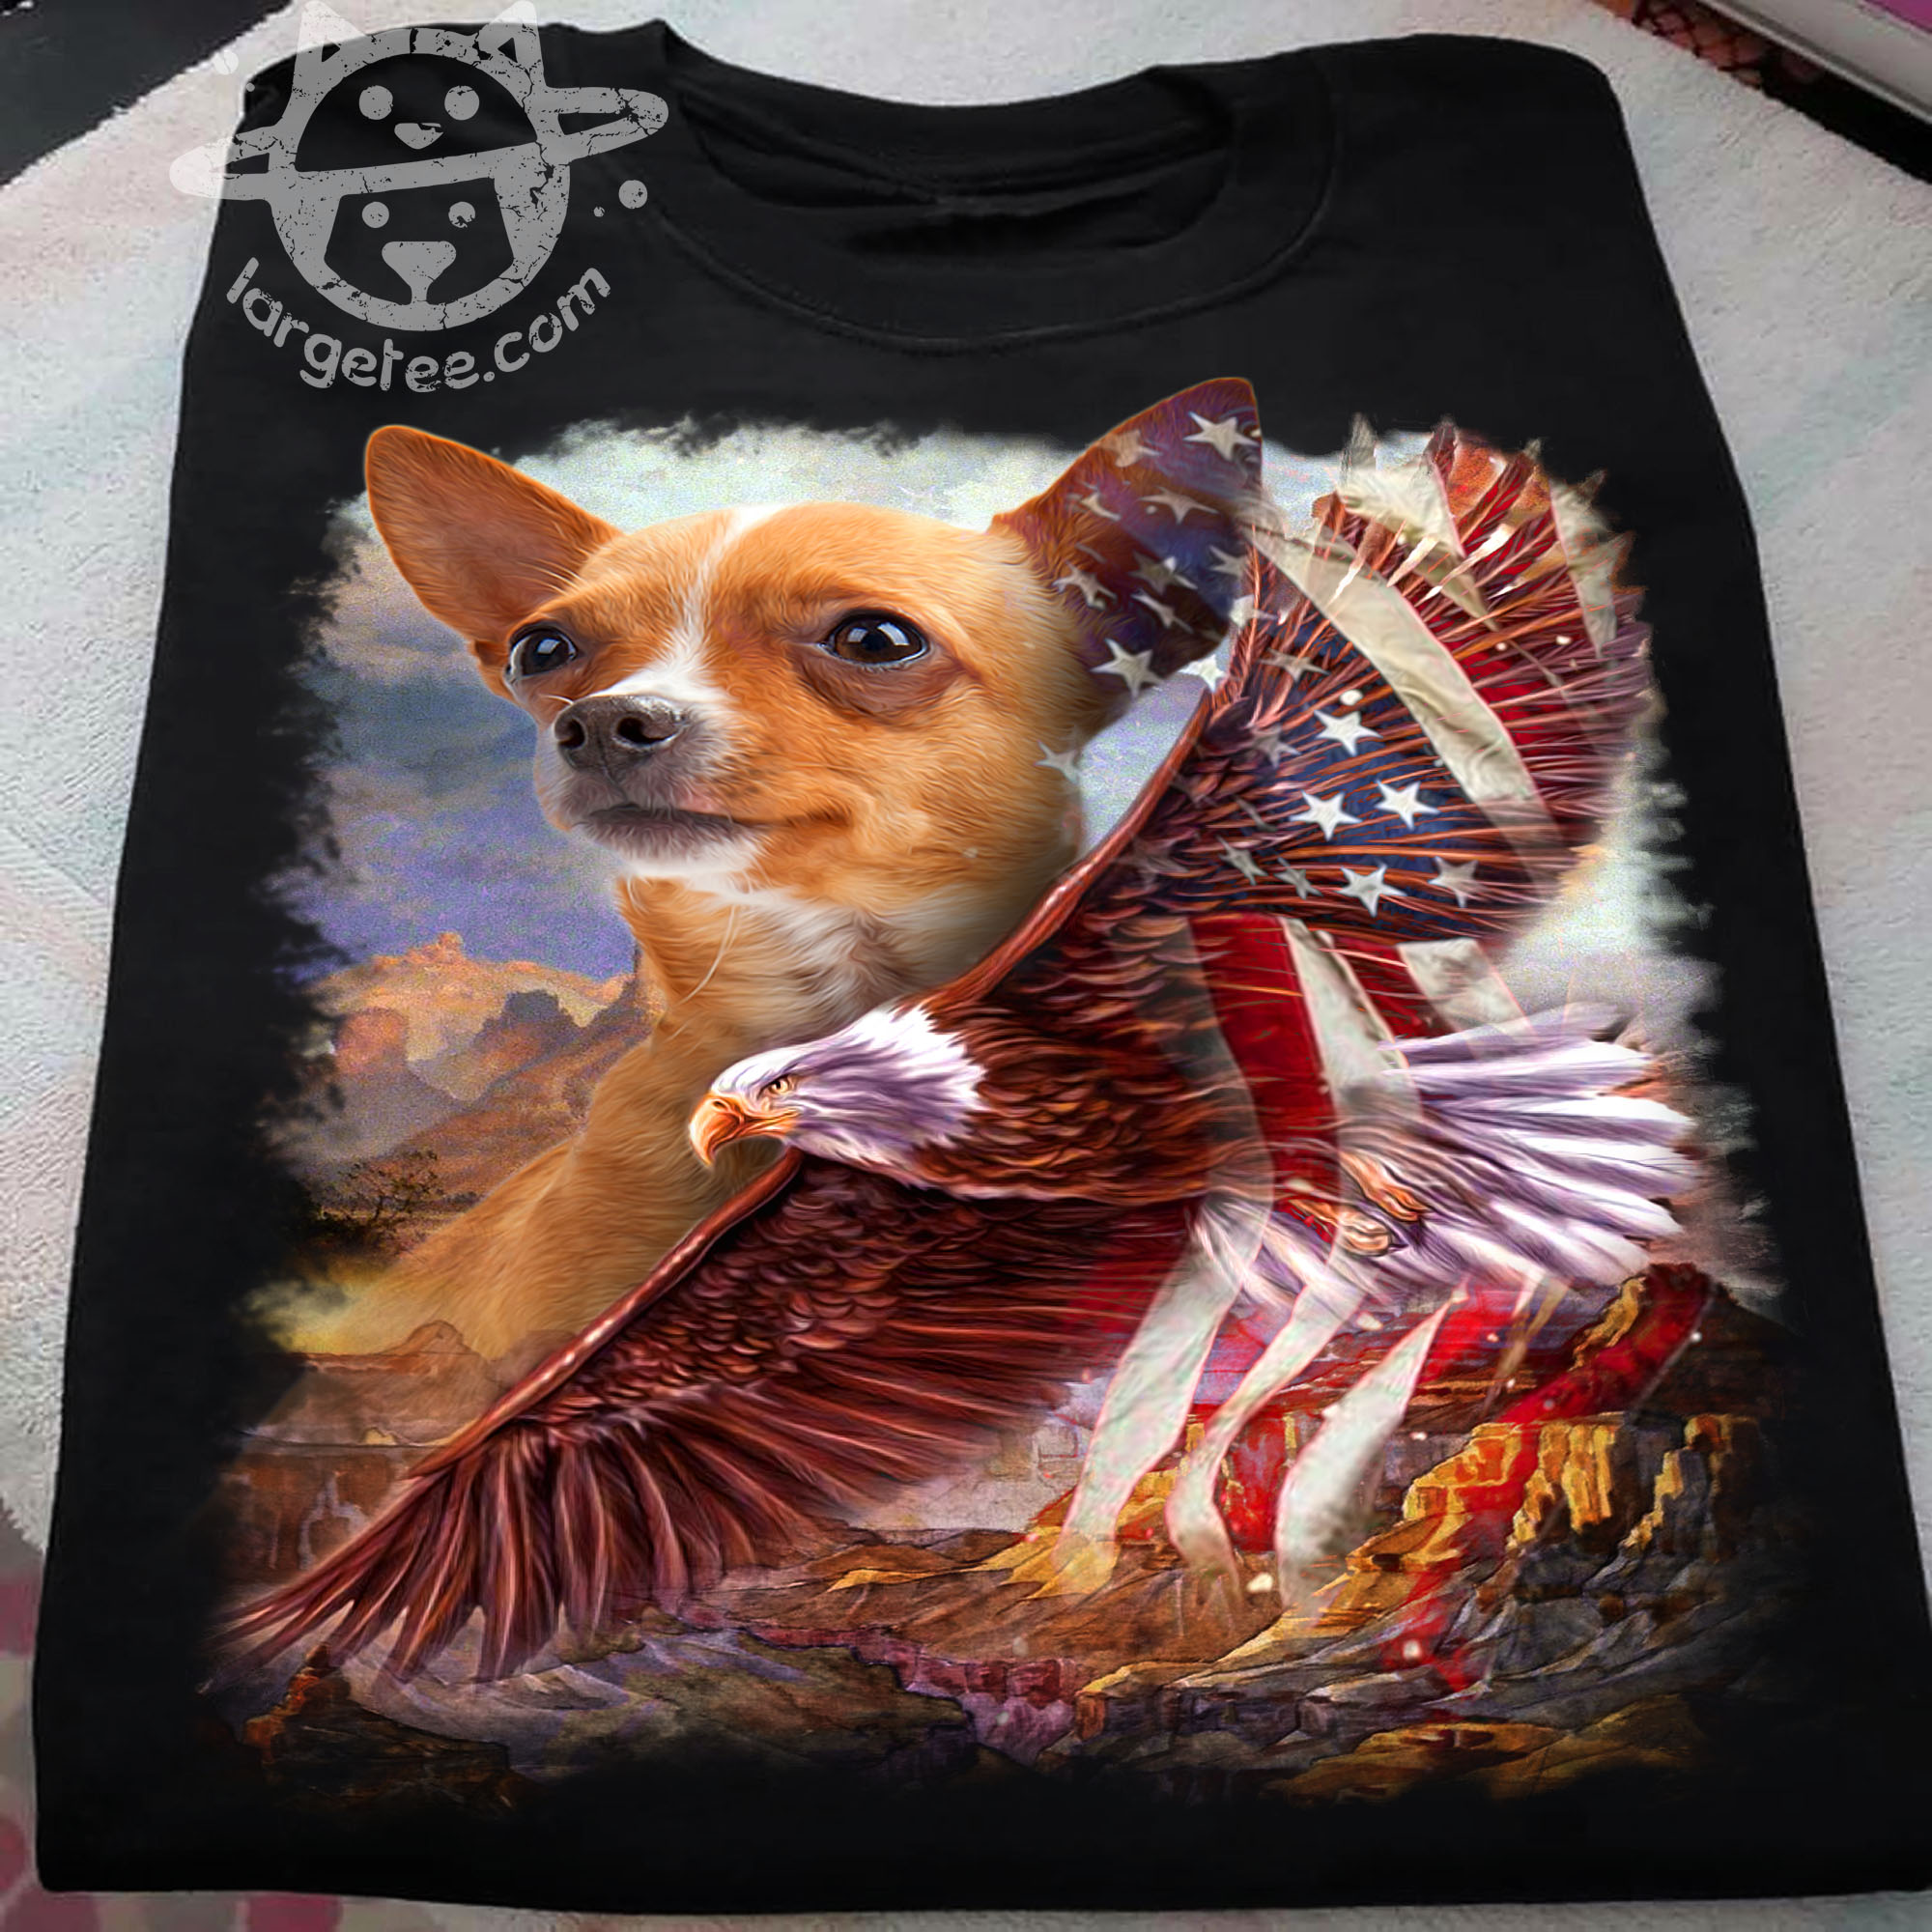 Chihuahua dog and eagle the symbol of America - America flag